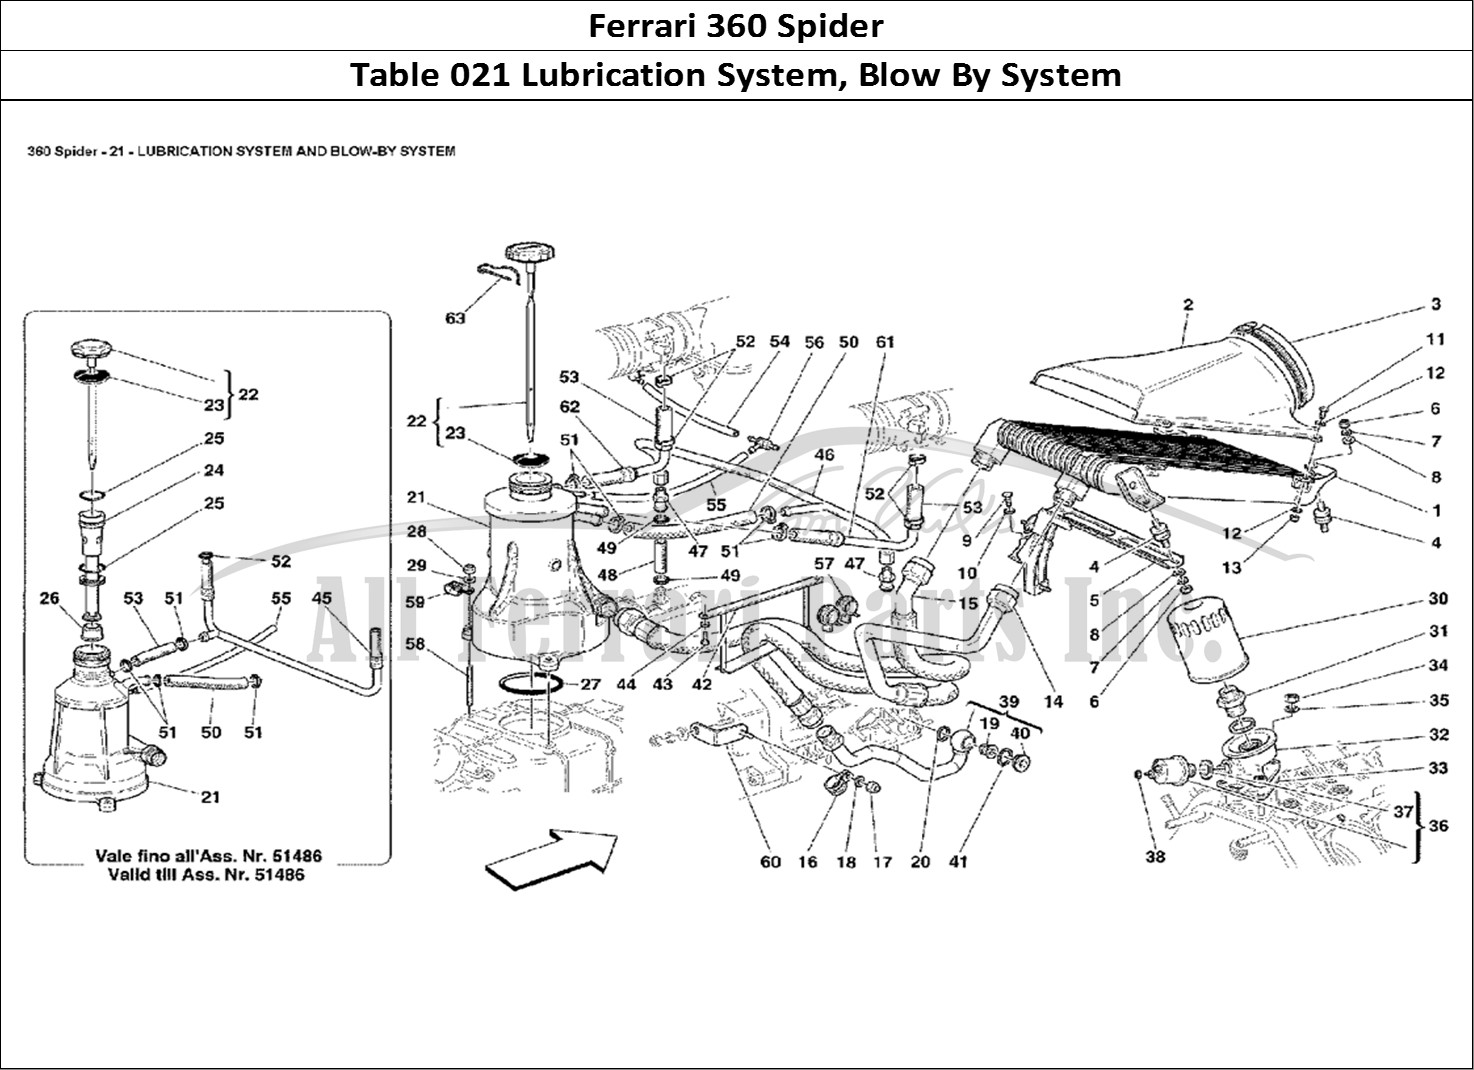 Ferrari Parts Ferrari 360 Spider Page 021 Lubrication System and Bl